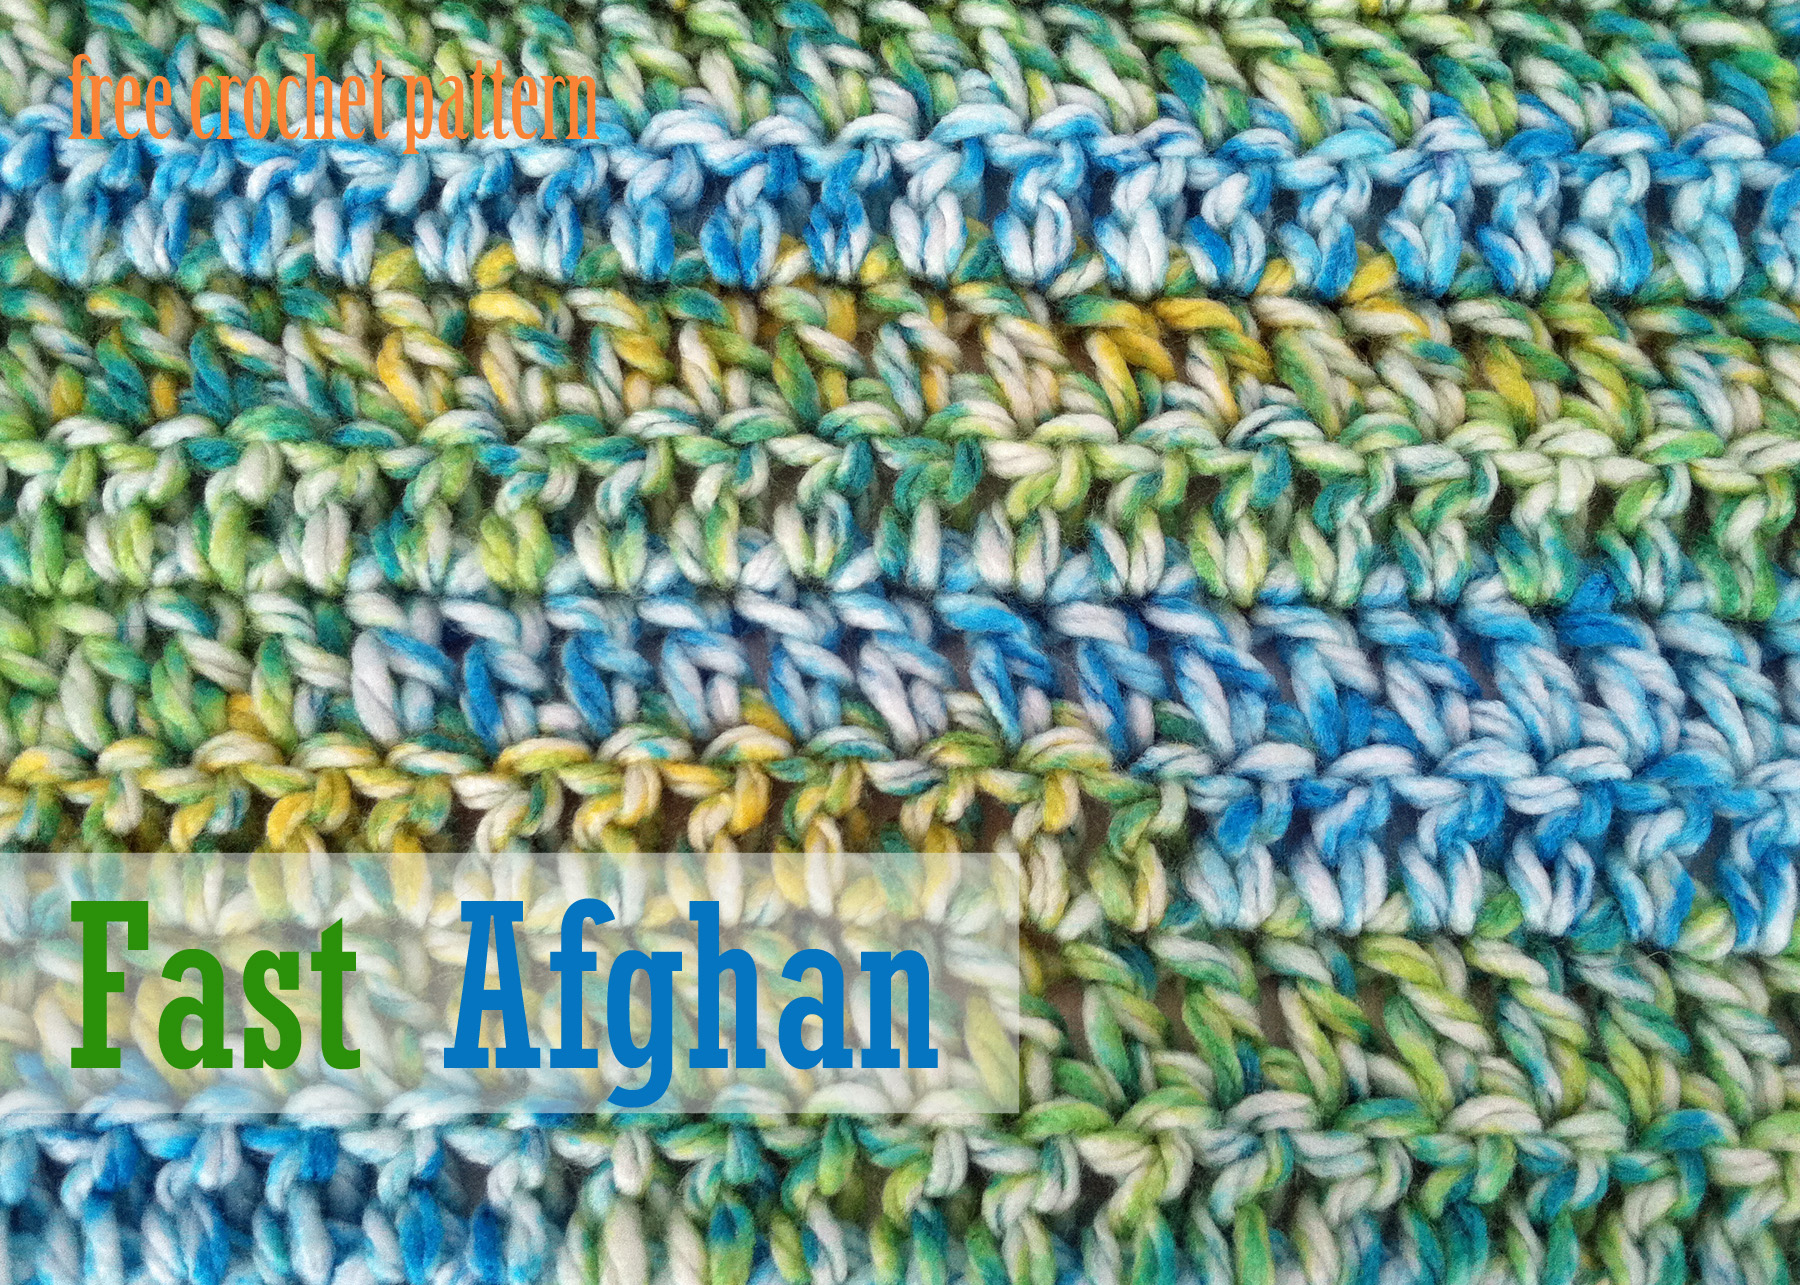 Easy Afghan Crochet Patterns Free Crochet Pattern Fast Afghan